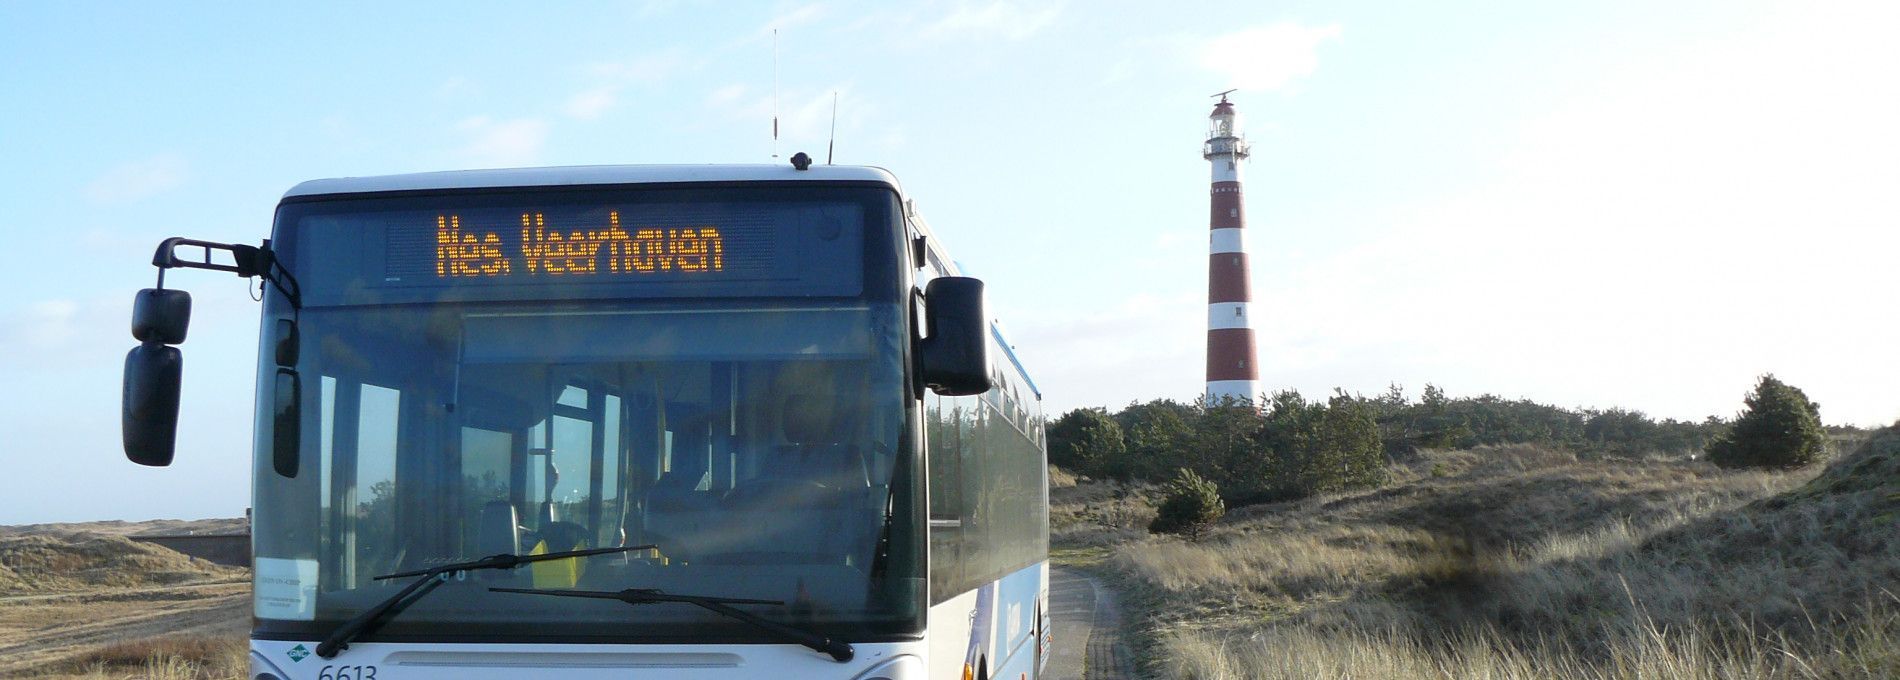 Bus transport on Ameland - Tourist Information 